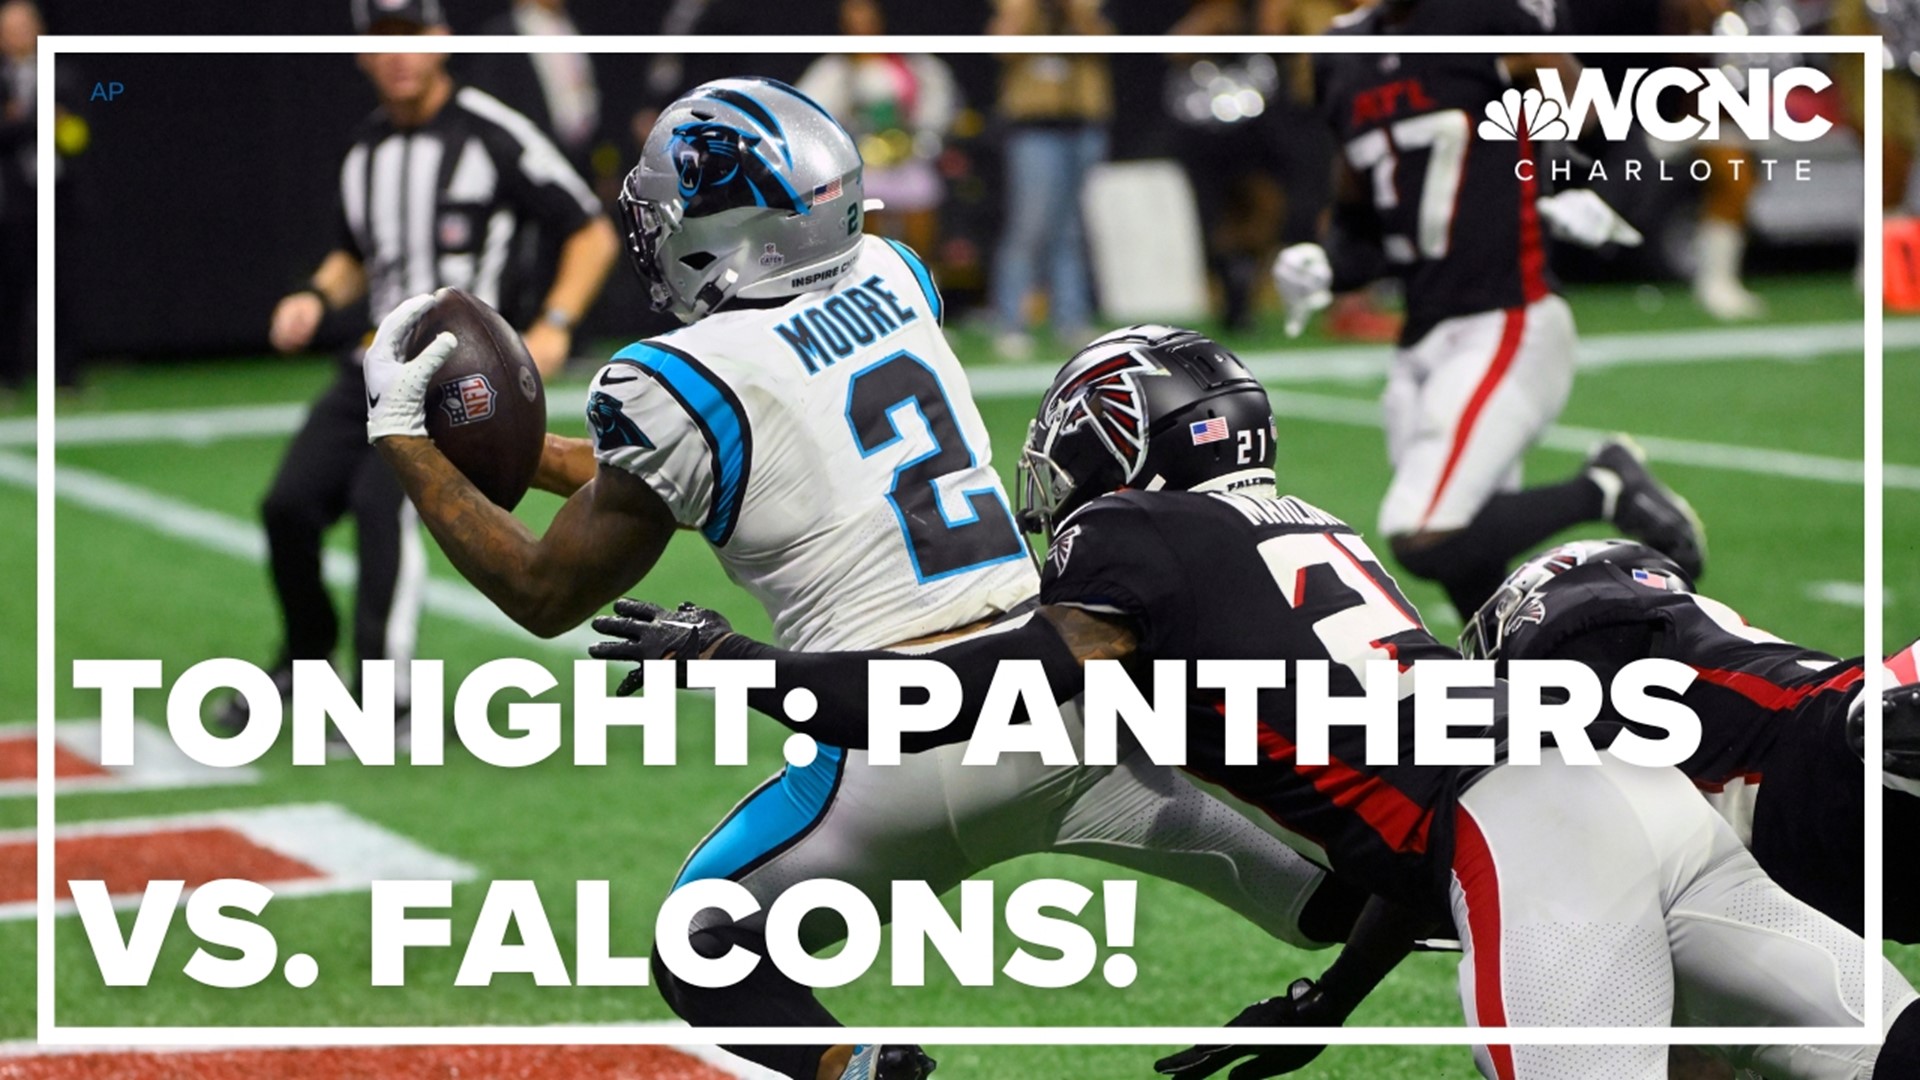 The Carolina Panthers hosting the Atlanta Falcons on Thursday Night Football.